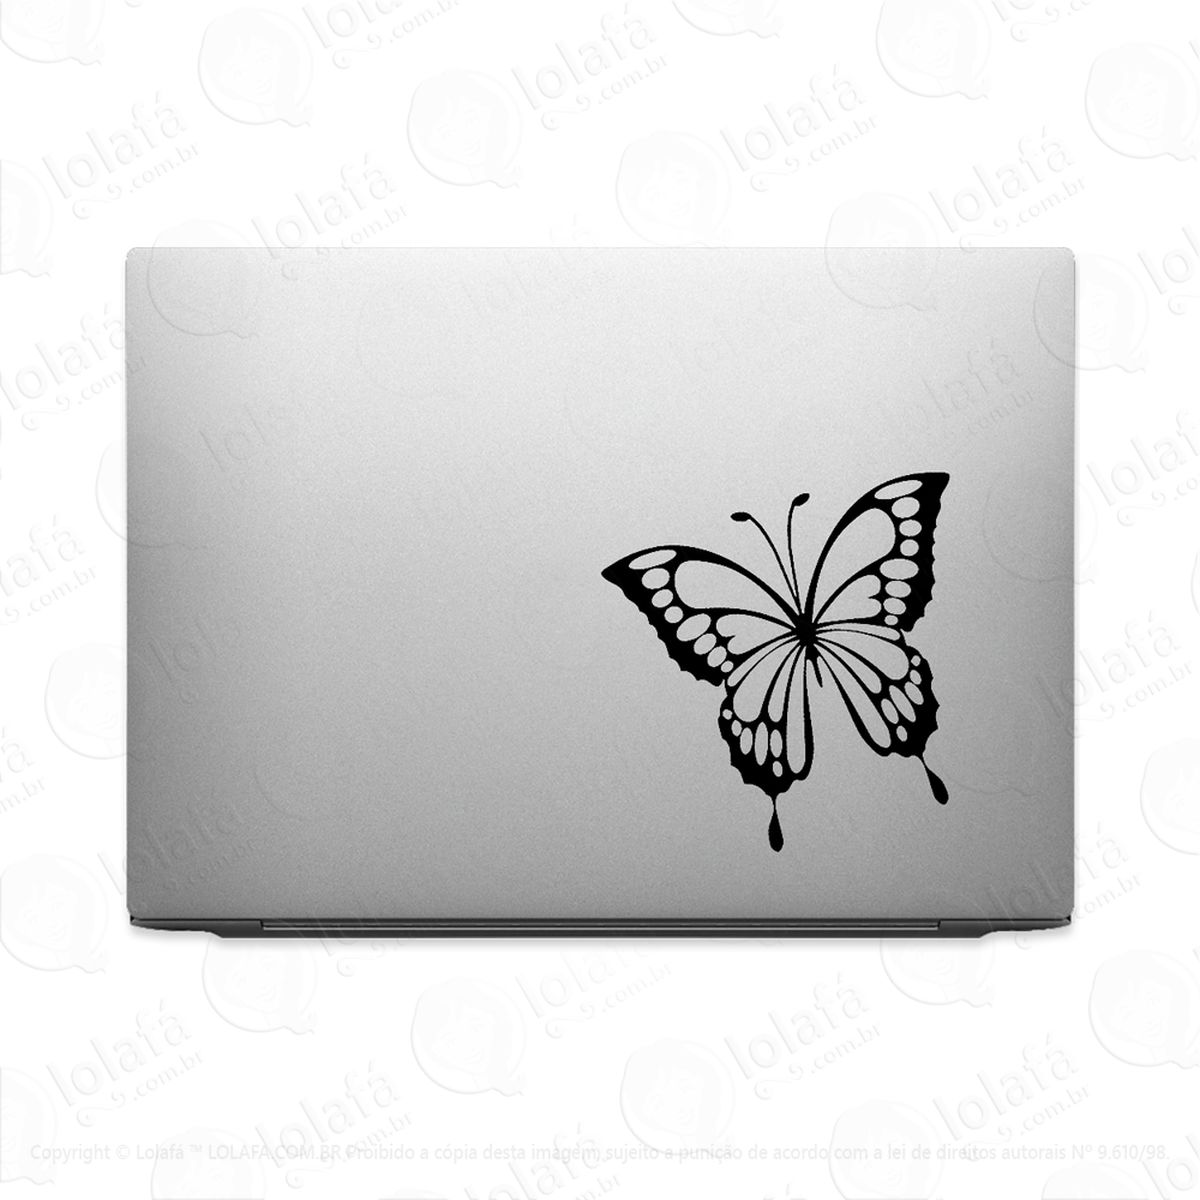 adesivo tablet notebook pc borboleta monarca mod:2047